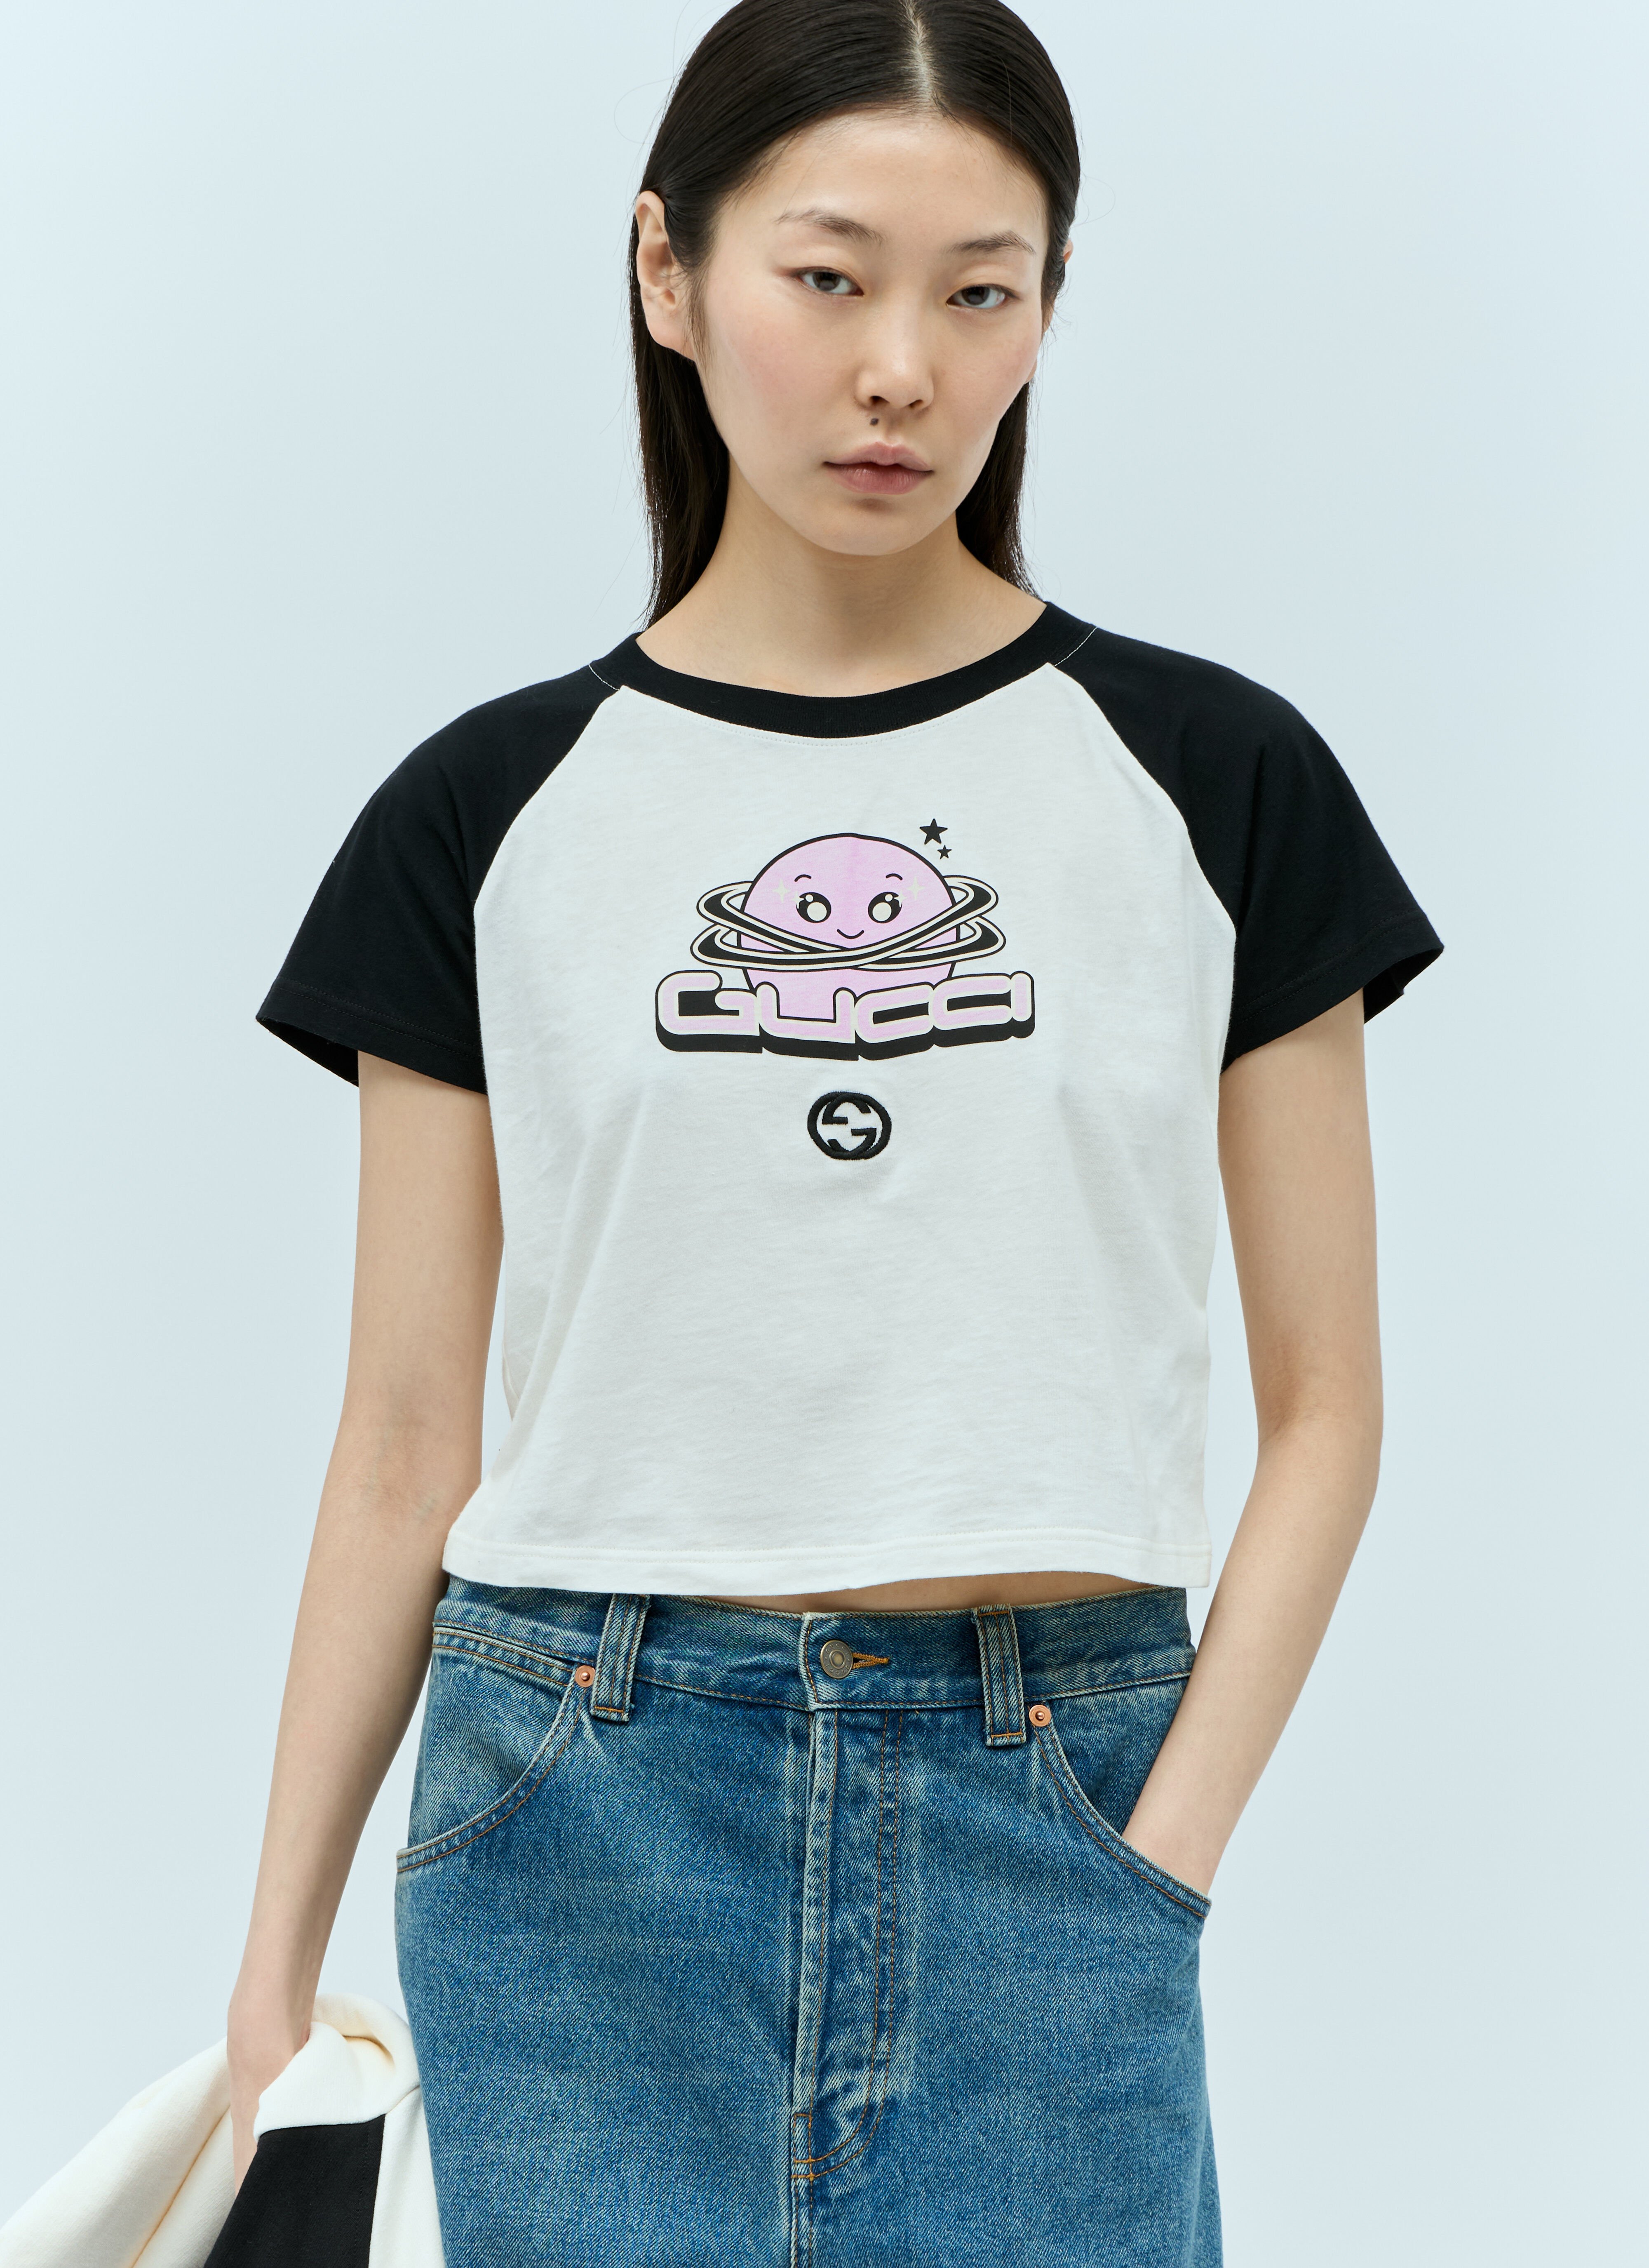 Jean Paul Gaultier x Shayne Oliver Logo Print T-Shirt Brown jps0257003